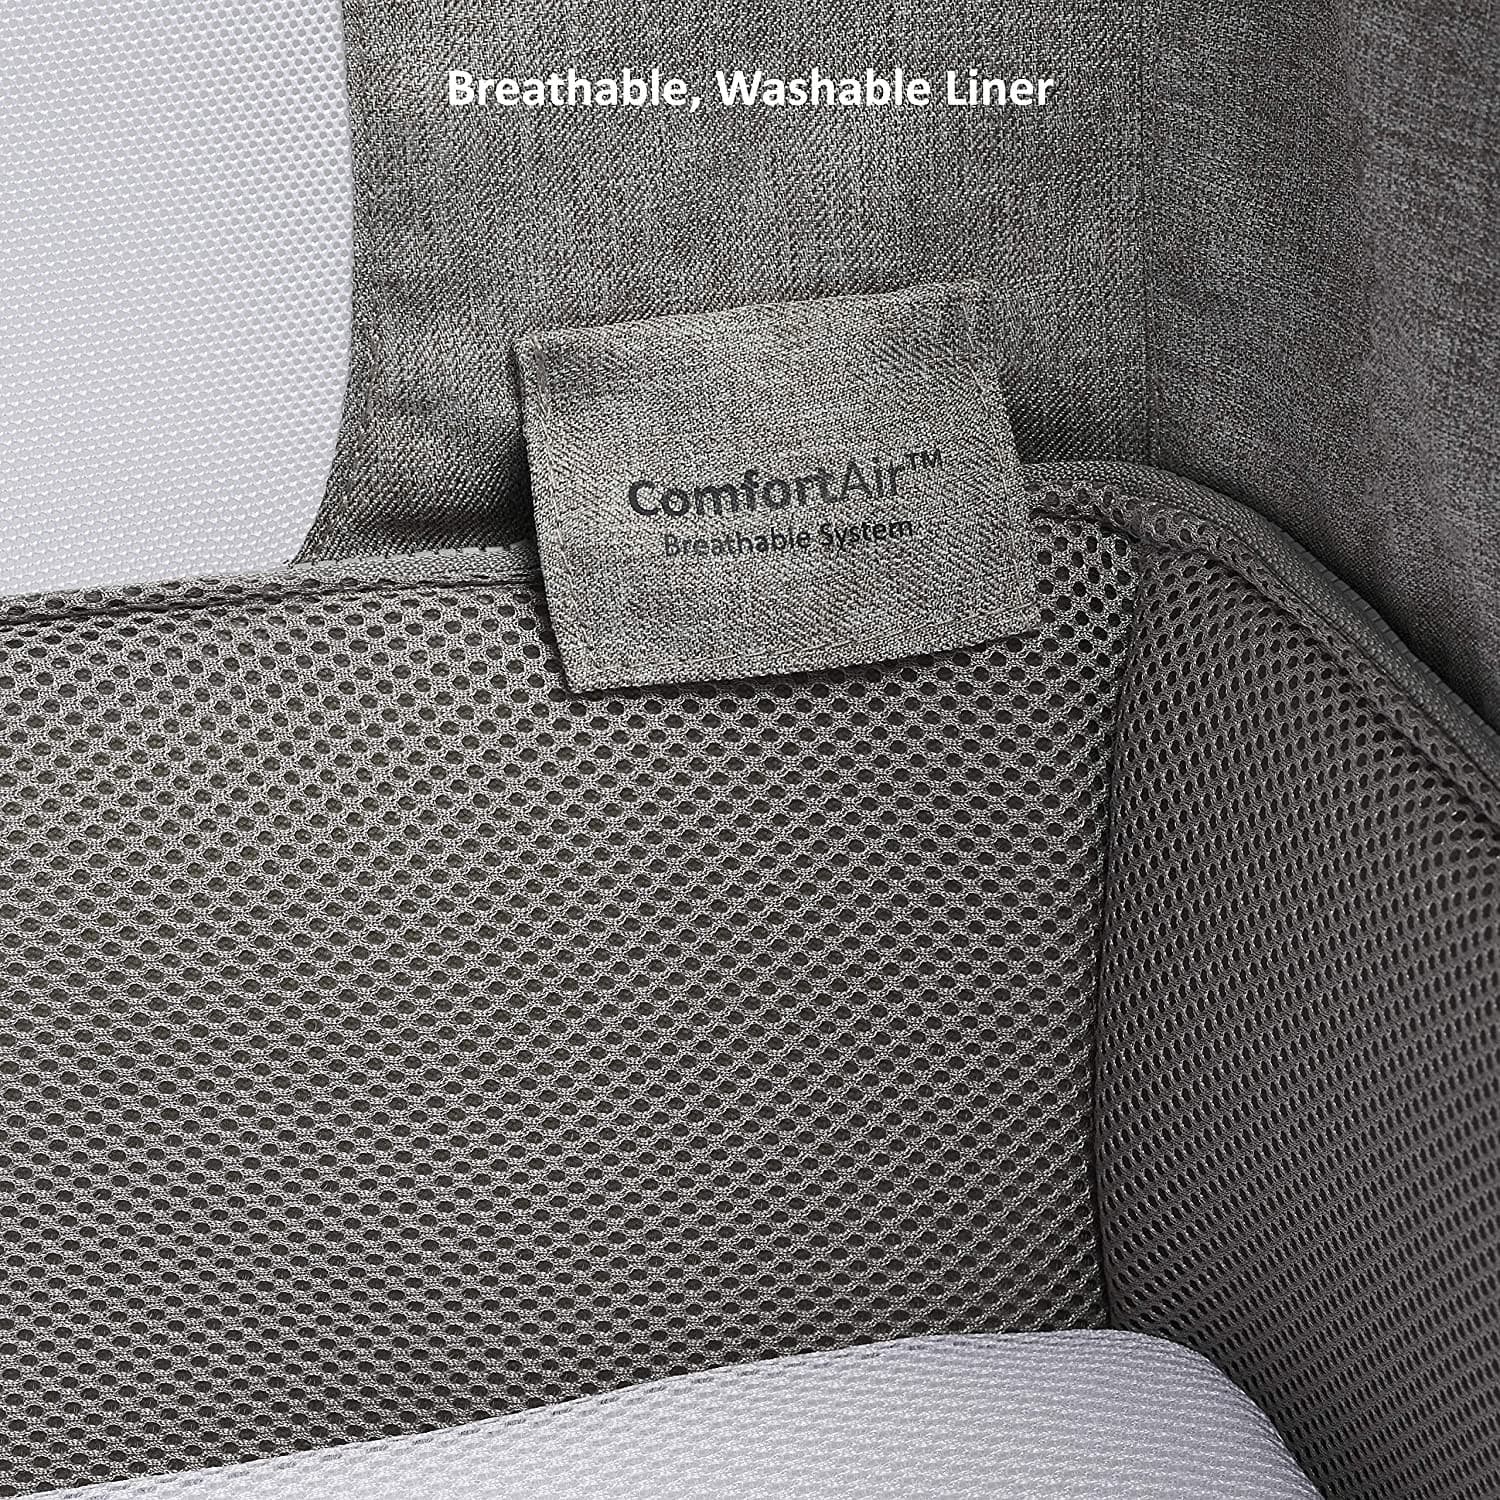 Snuzpod 4 Bedside Crib - Sleep Tight & Safe - Grey.